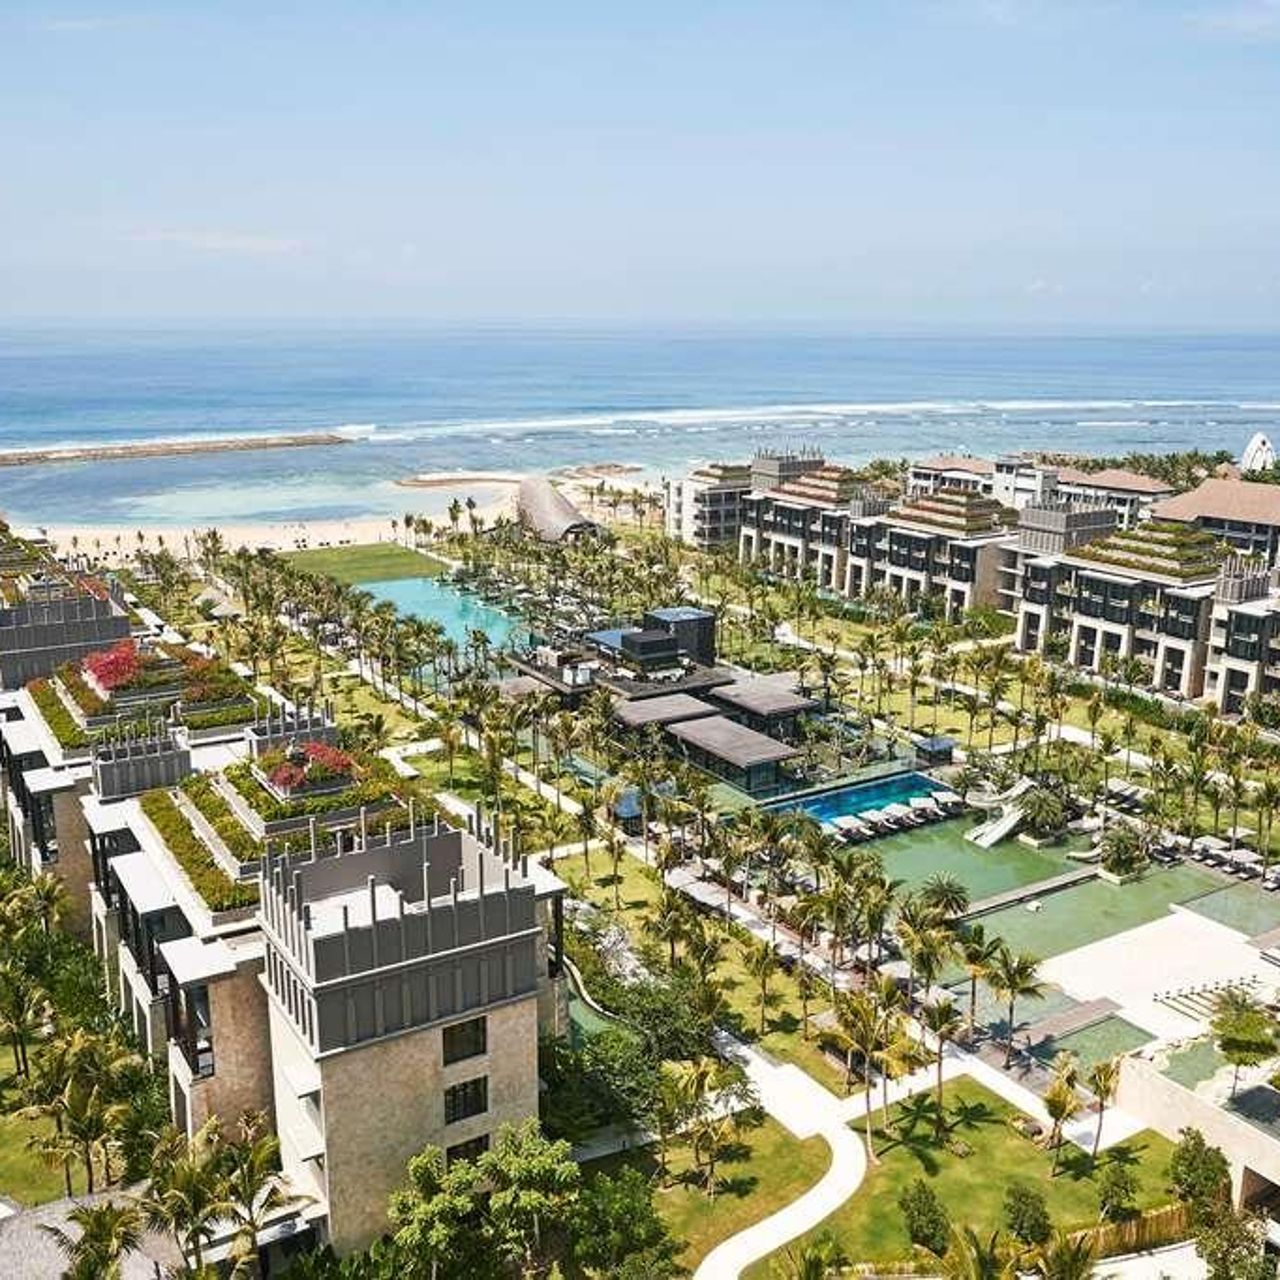 Hotel The Apurva Kempinski Bali - Denpasar chez HRS avec services gratuits